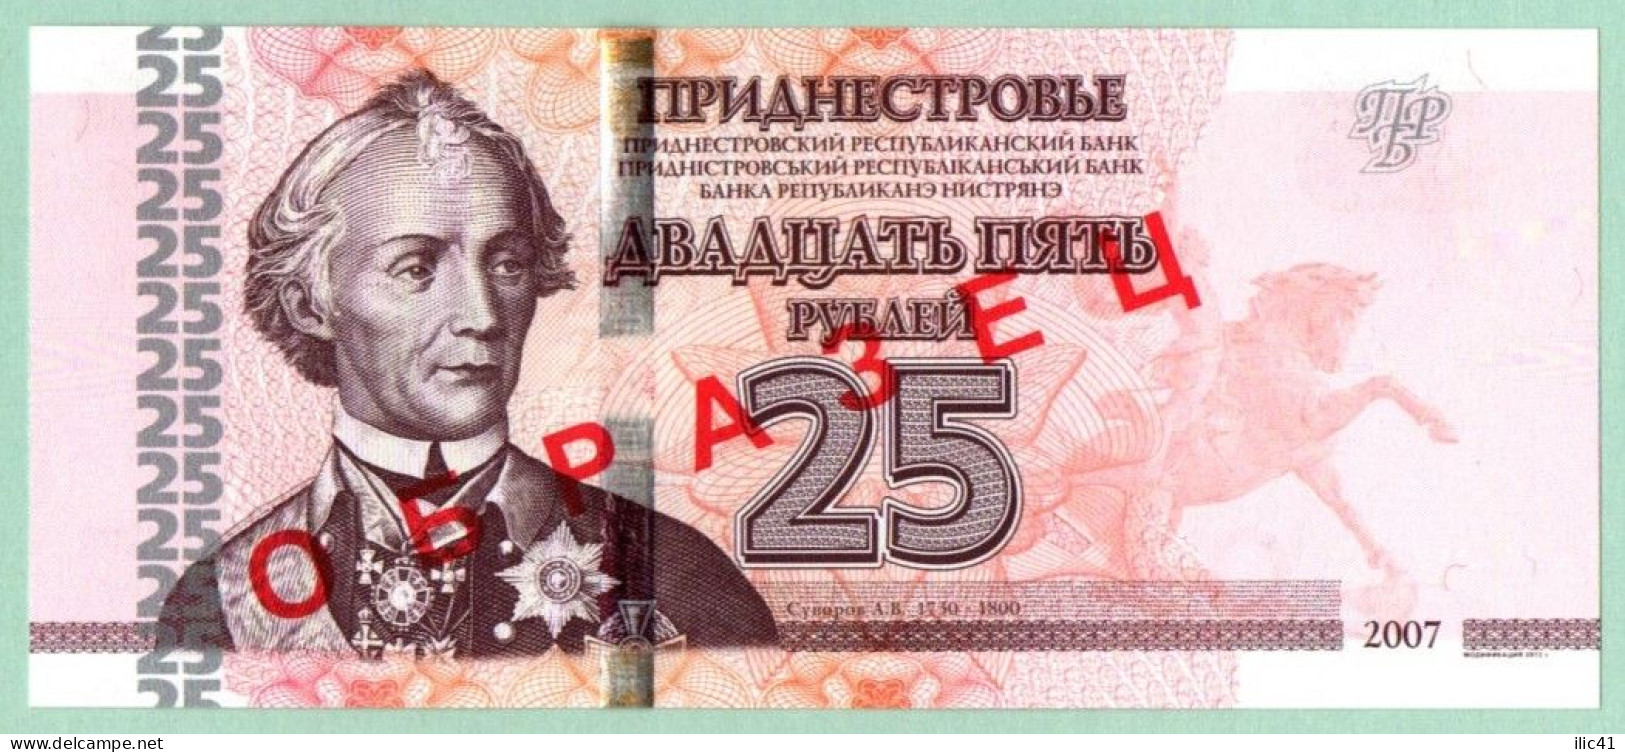 Moldova Moldova  Bancnote 2012 Din Transnistria 25 Rublu SAMPLE Din Toate Cele Trei Emisiuni   UNC - Moldova